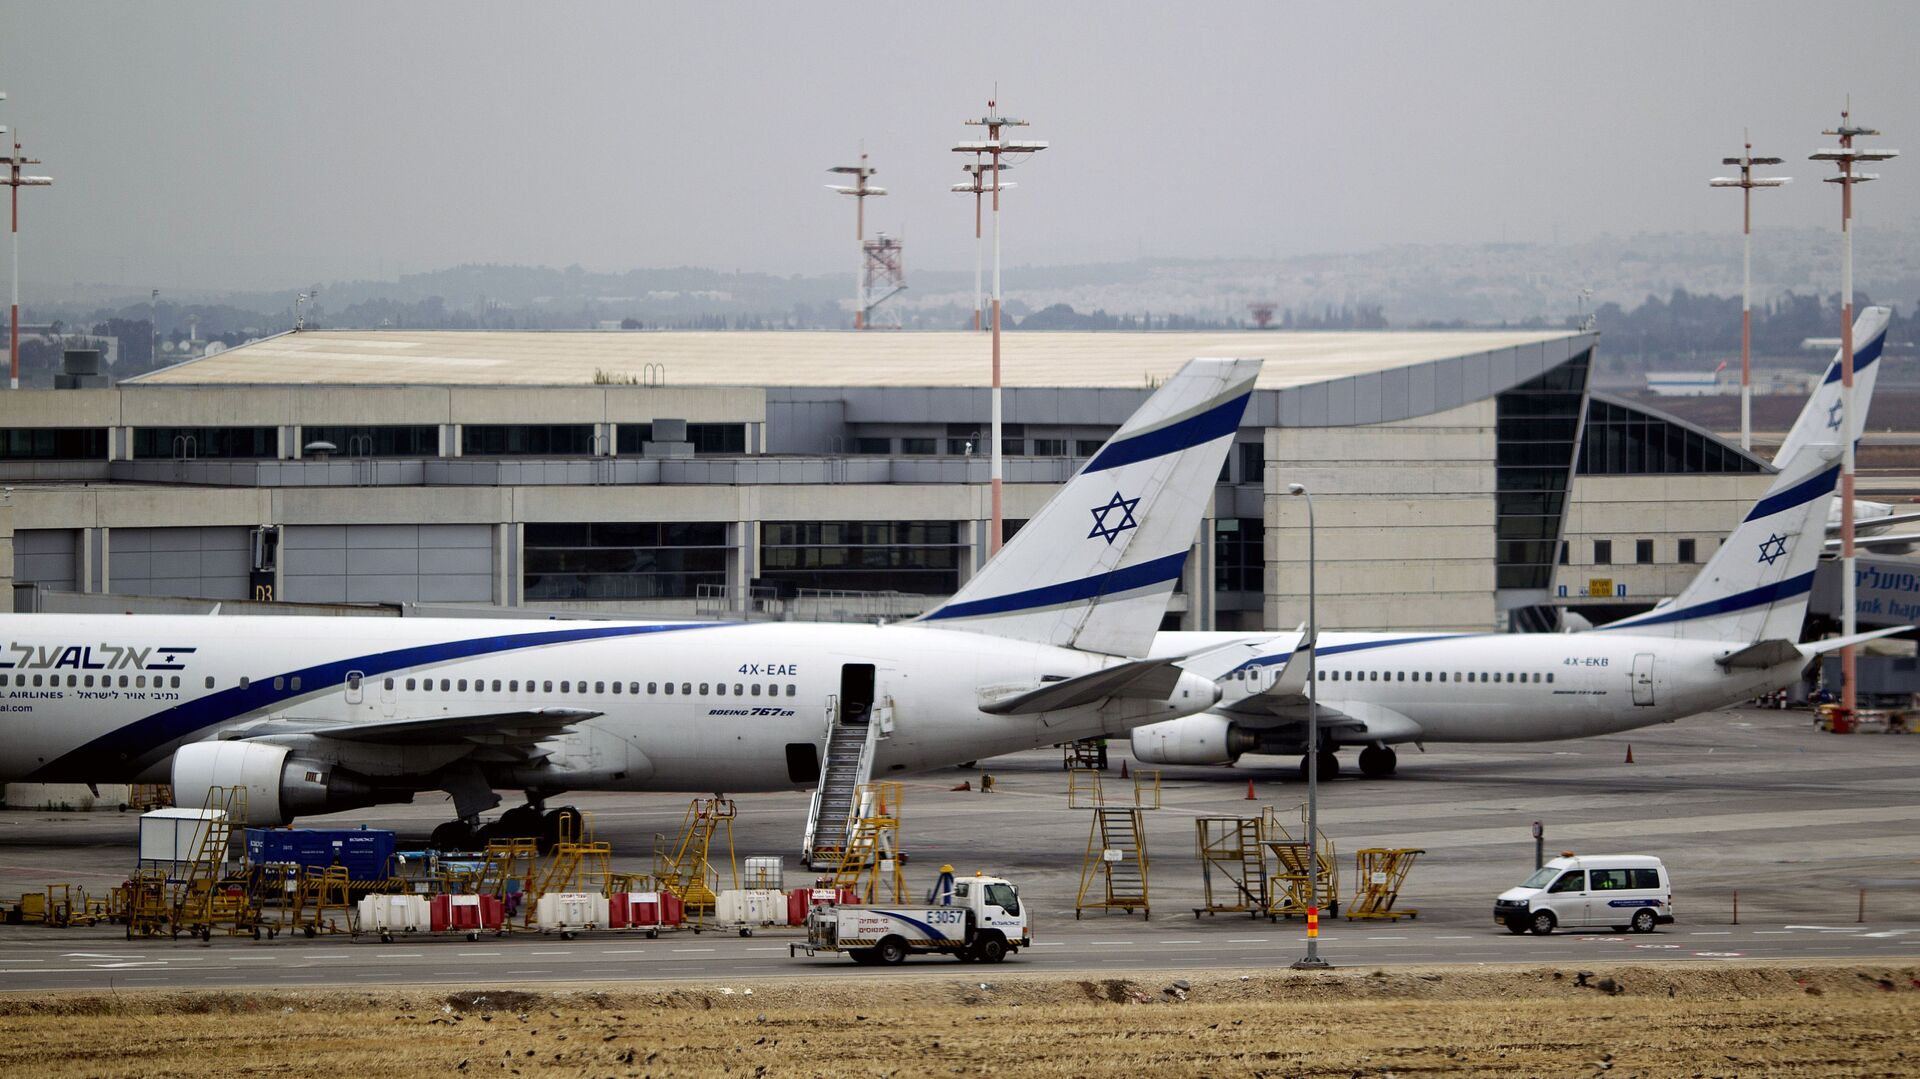 مطار بن غوريون الدولي في تل أبيب، إسرائيل 21 أبريل/ نيسان 2013 - سبوتنيك عربي, 1920, 25.07.2021